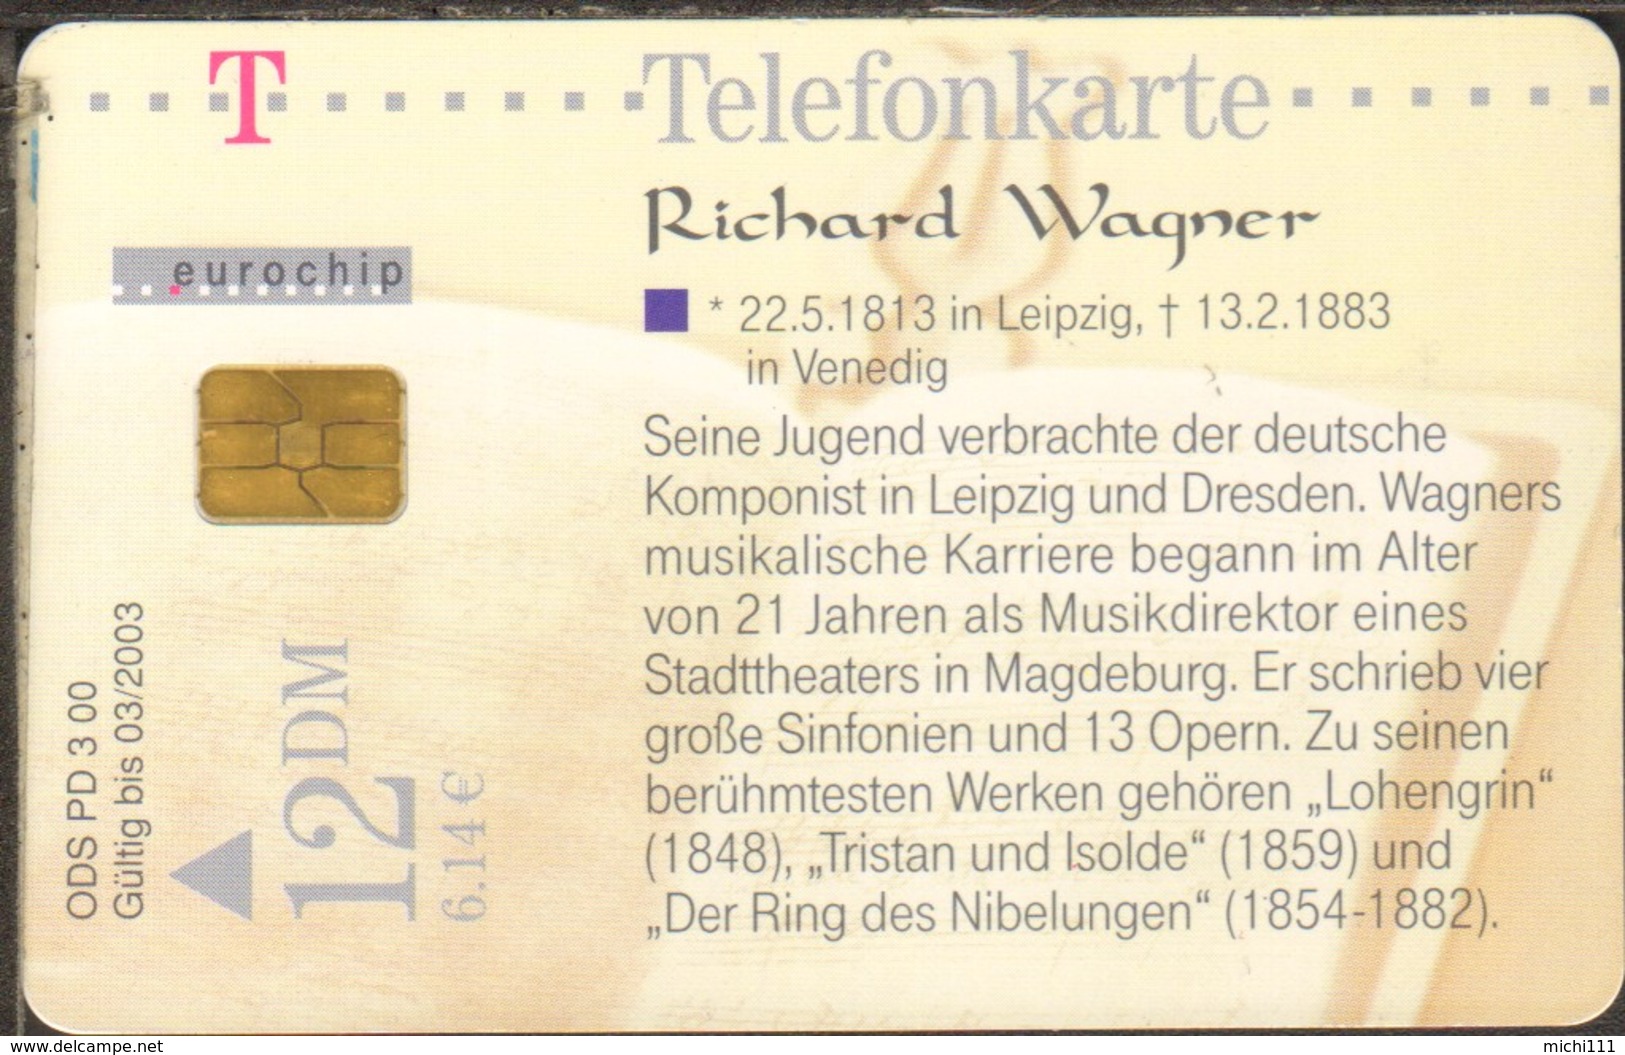 Phonecard Telefonkarte Richard Wagner 2003 PD 3 00 12DM 6,14€ Used - P & PD-Series: Schalterkarten Der Dt. Telekom